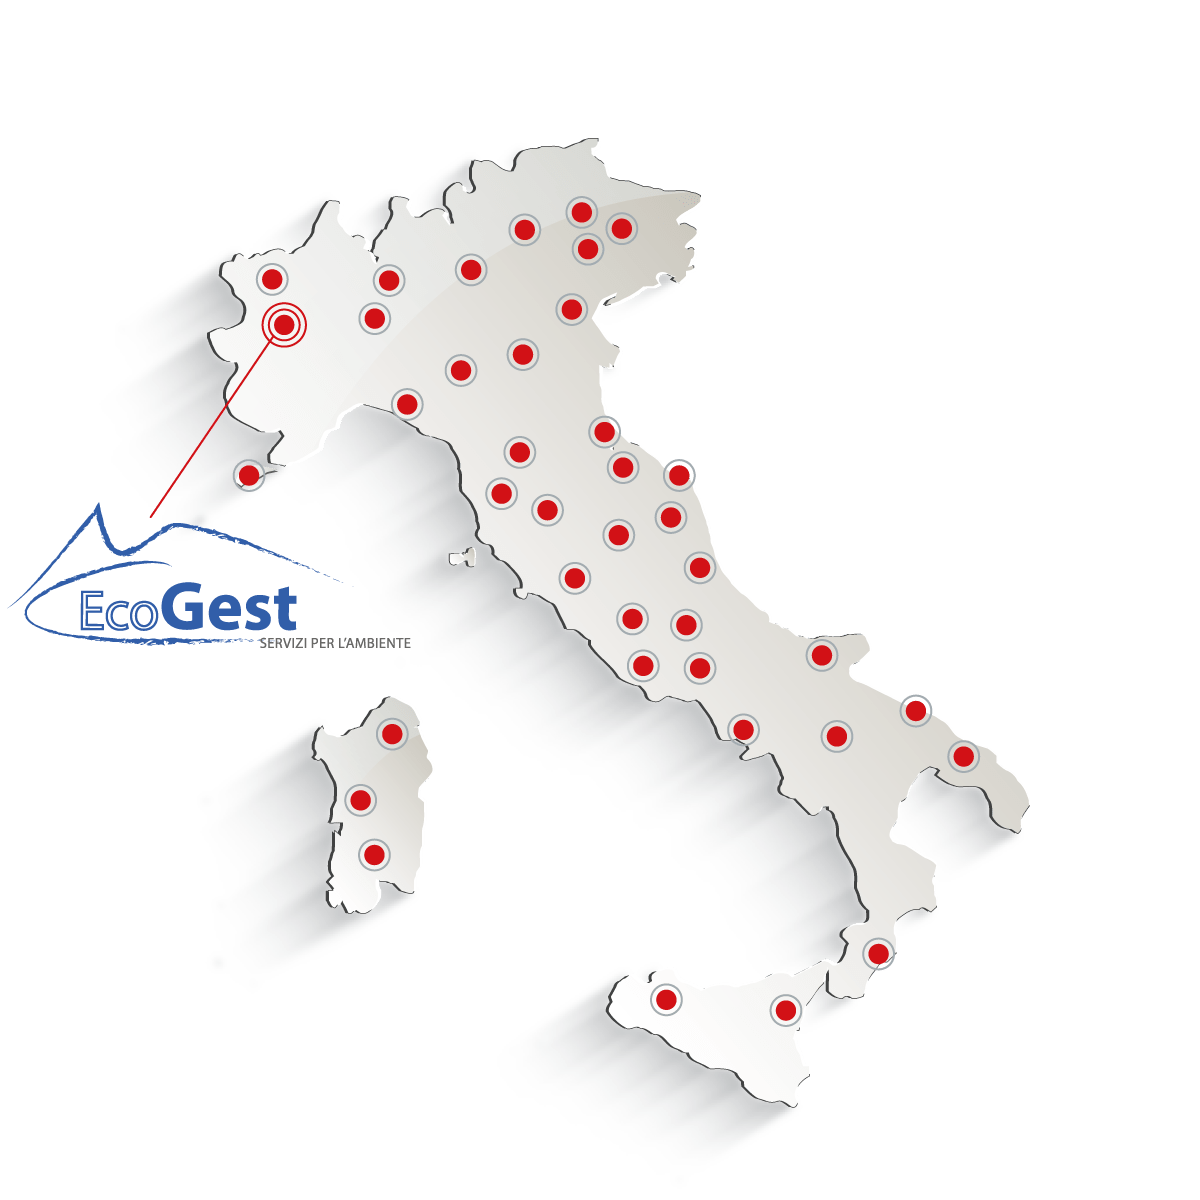 Ecogest concessionario specializzato regione piemonte